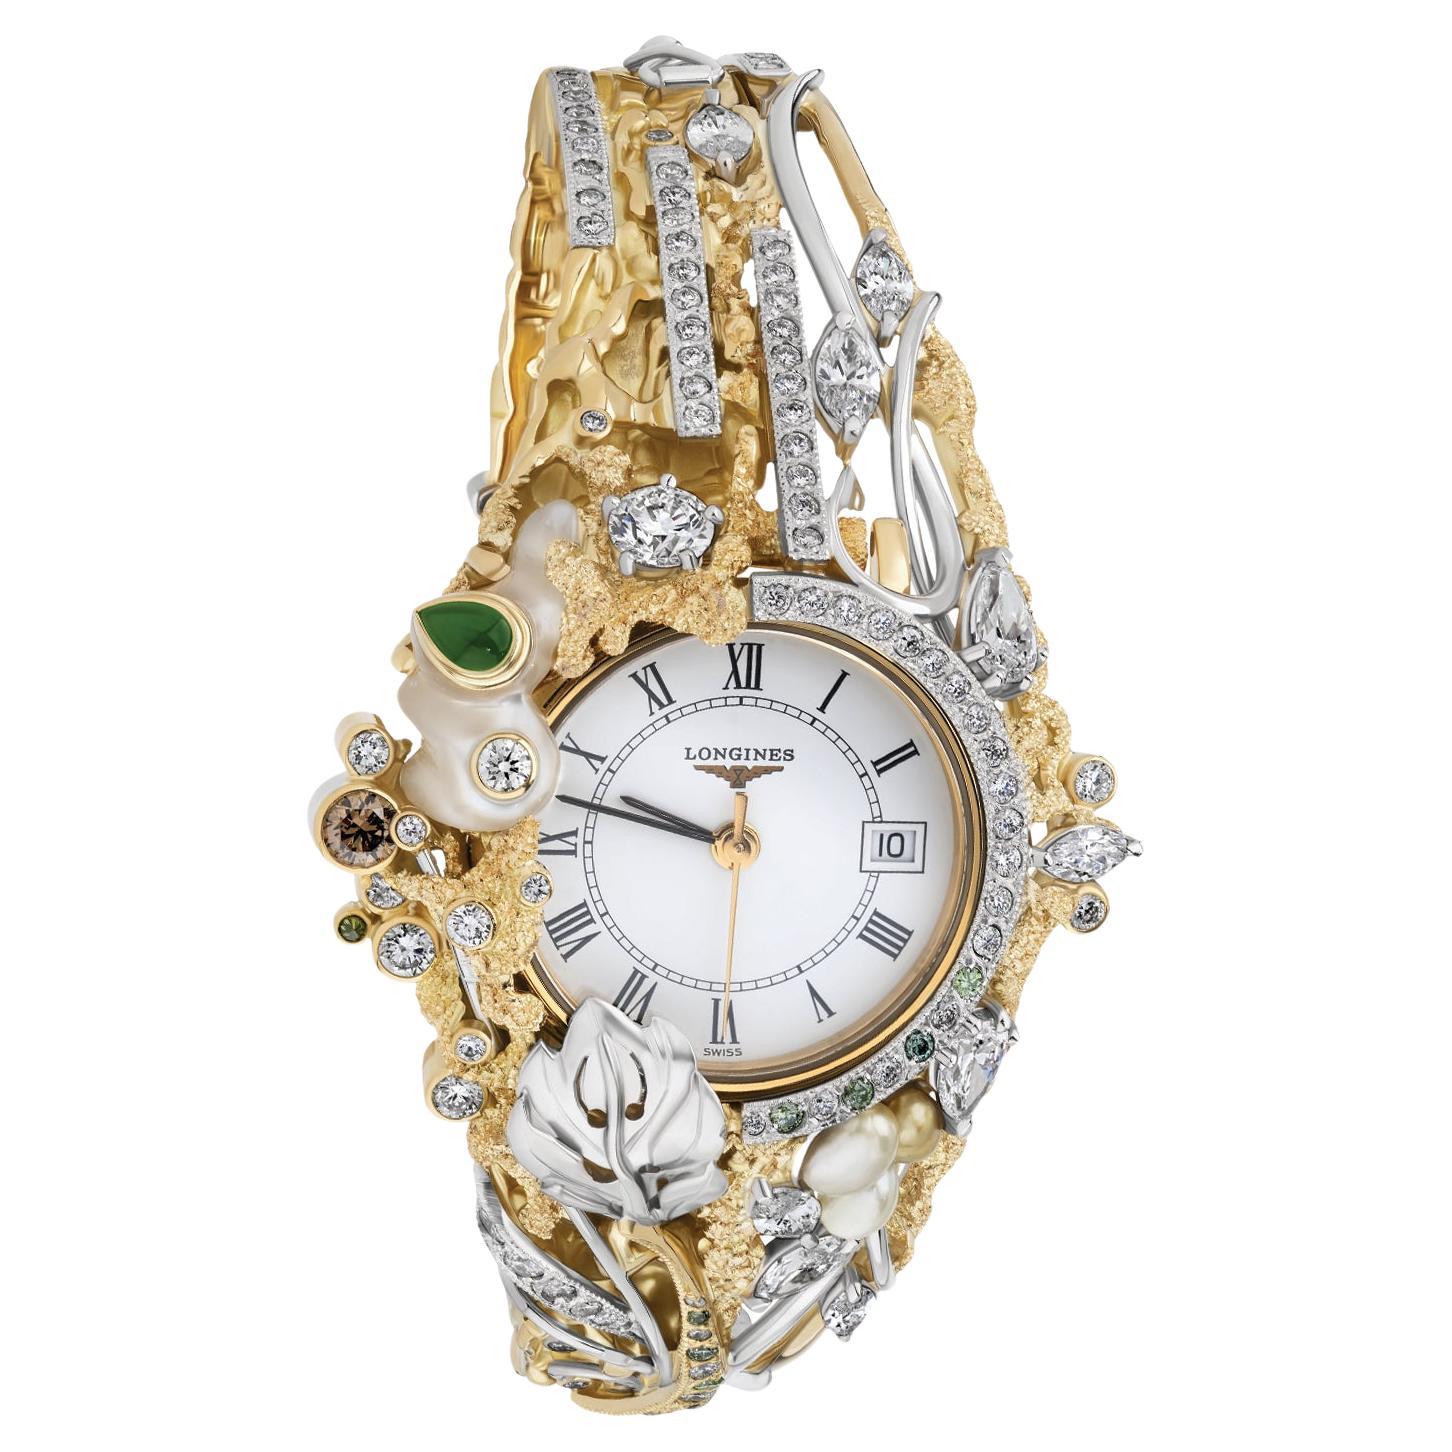 Paul Amey "Kizmet Jade" Ladies Watch Bracelet With Longines Case and Movement For Sale